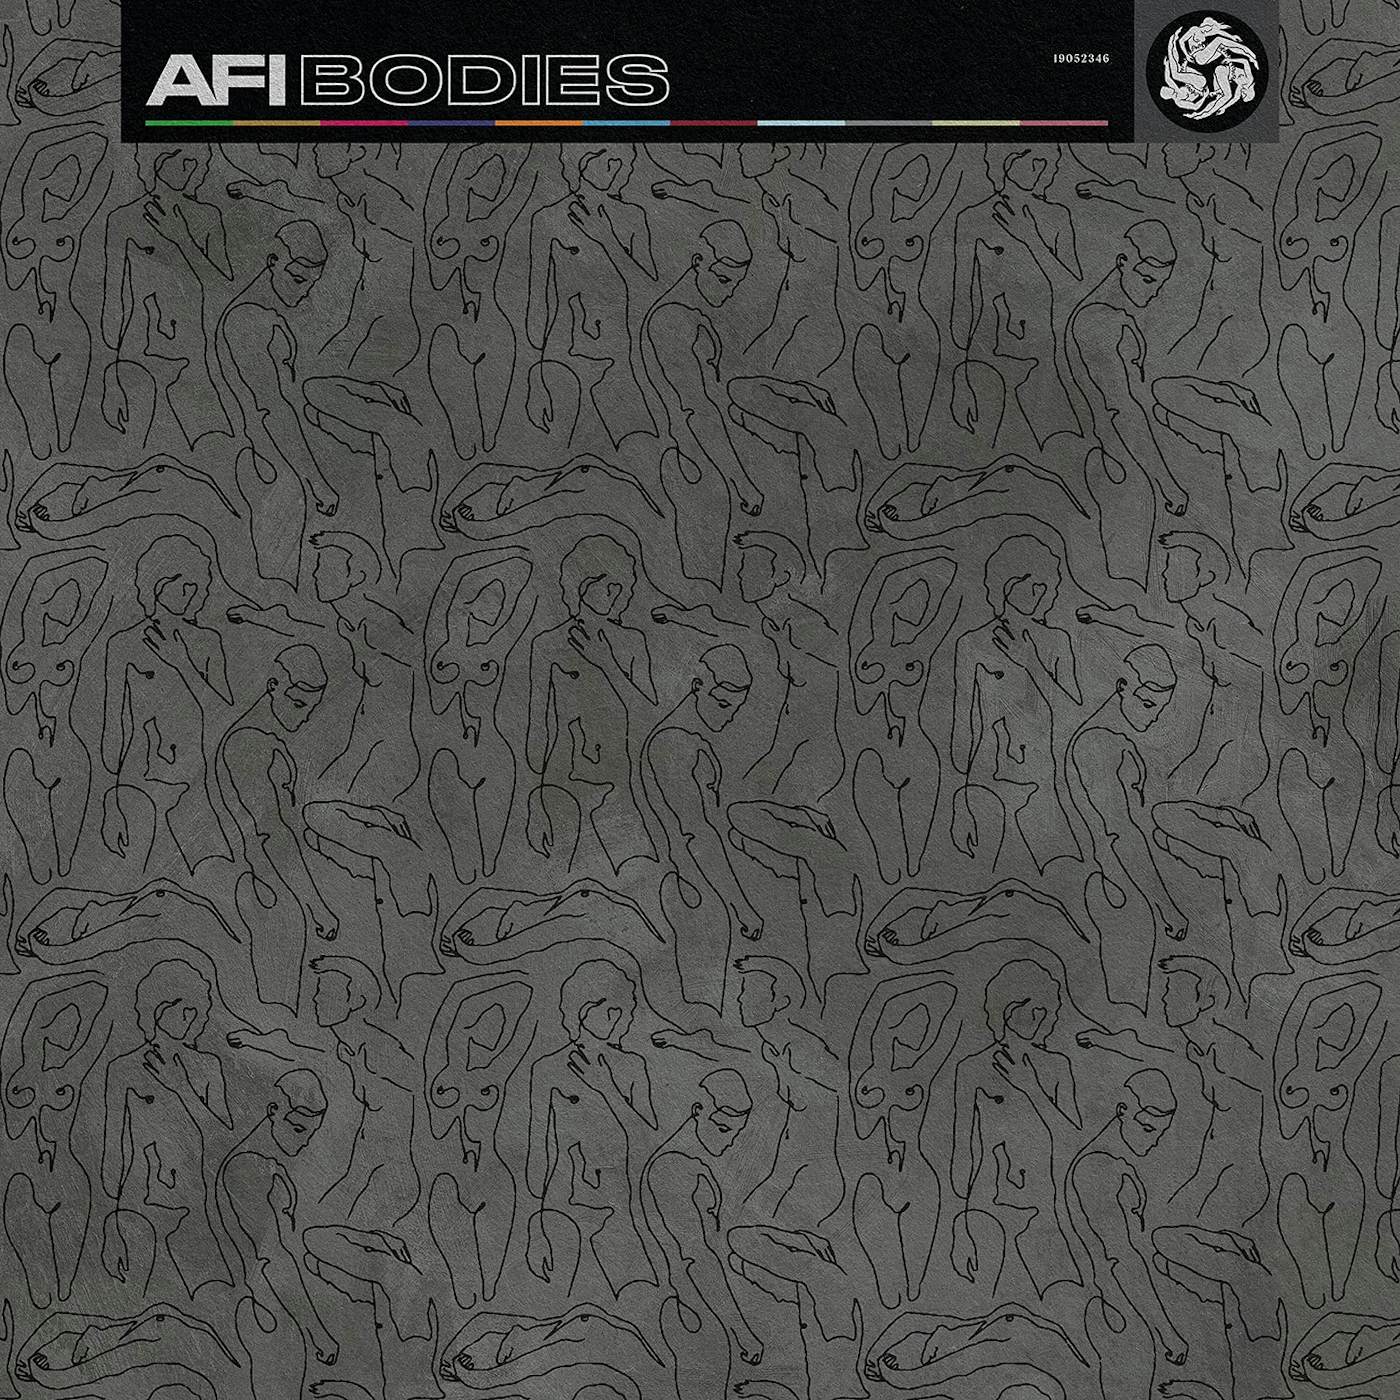 AFI Bodies Vinyl Record